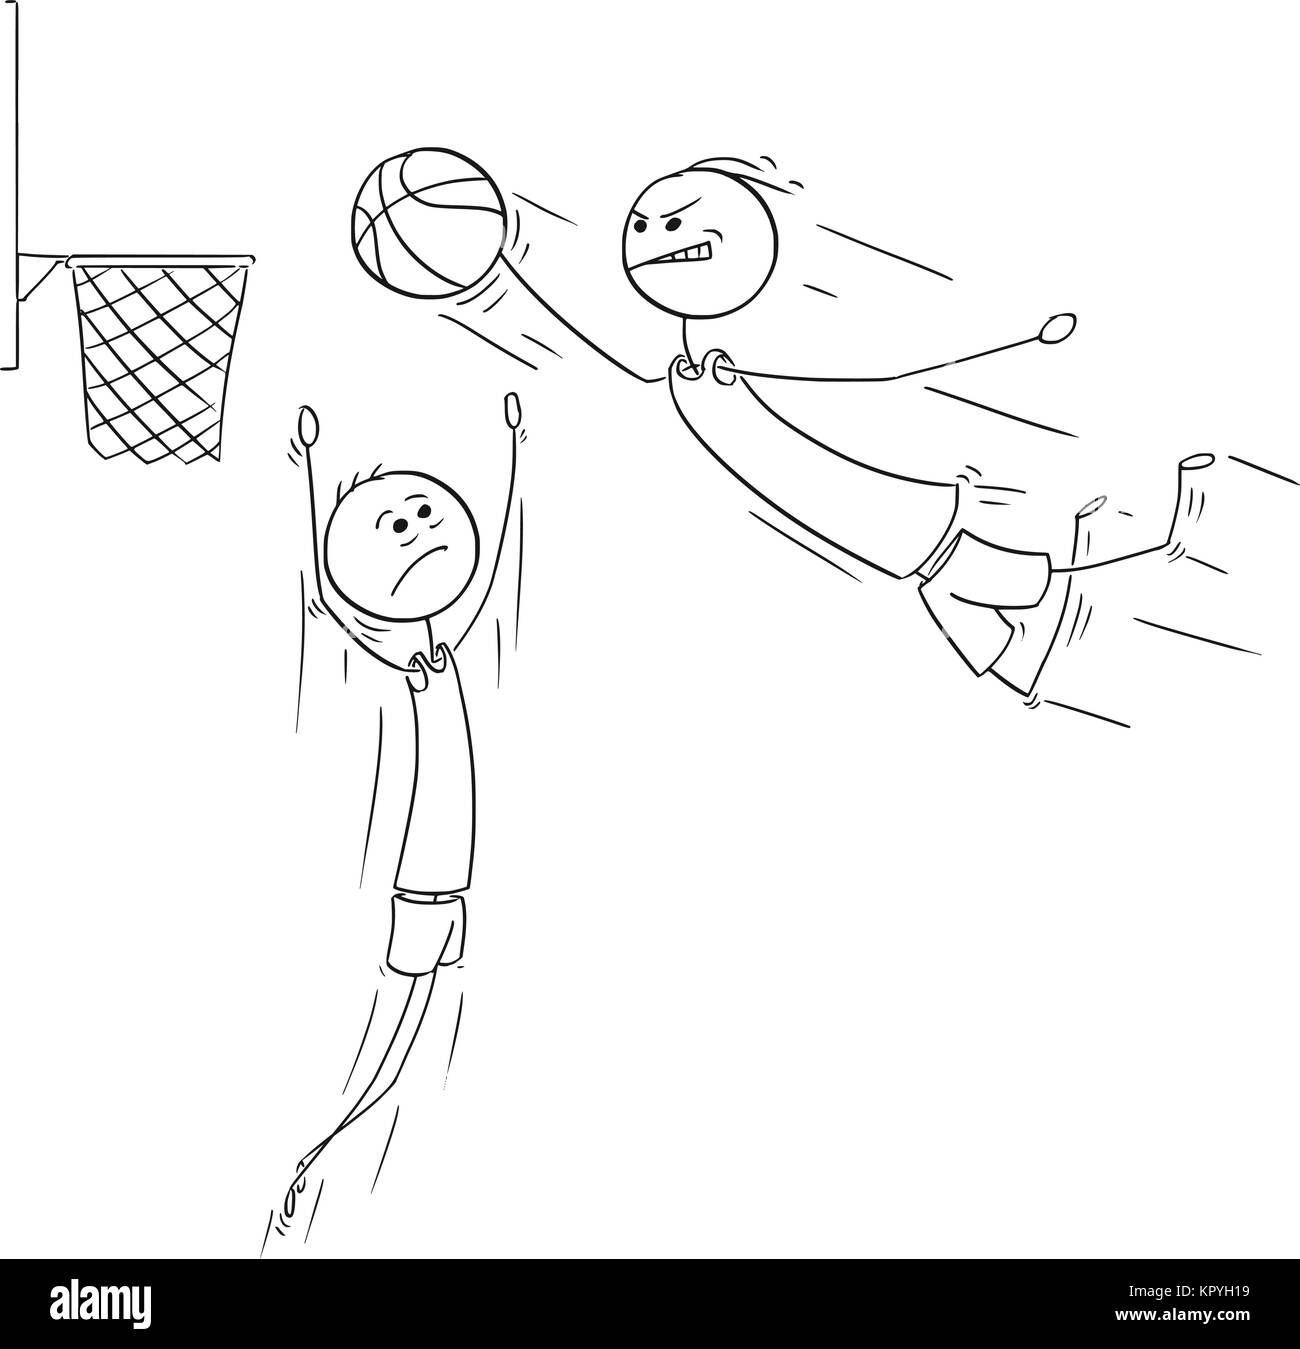 Cartoon stick man drawing illustration of basketball player jumping and scoring goal. Stock Vector